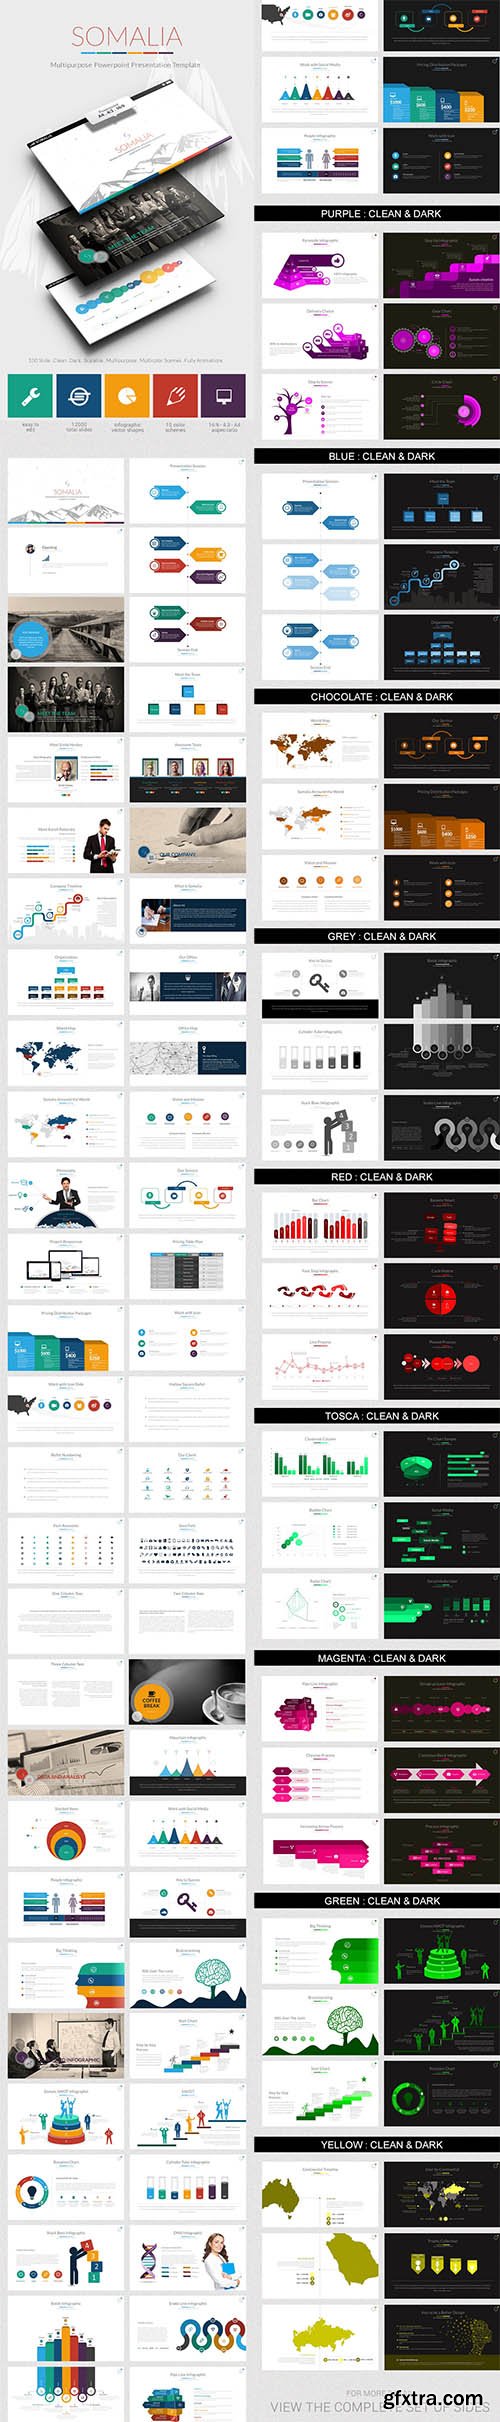 GraphicRiver - Somalia Powerpoint Presentation Template 10412029